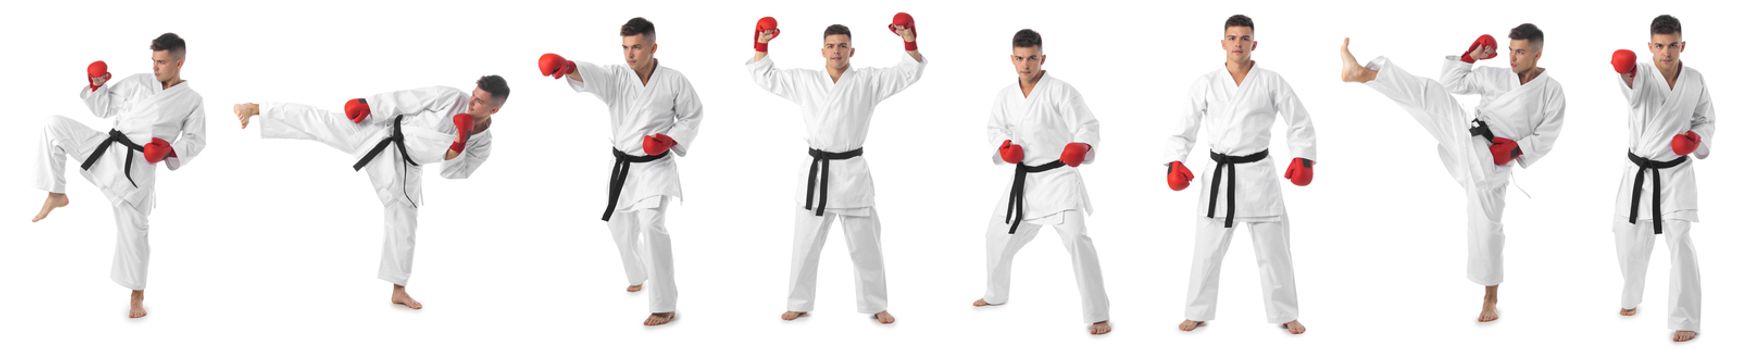 Taekwondo, judo, karate athlete. Set of full length portraits of man in white kimono black belt and red gloves isolated on white background.